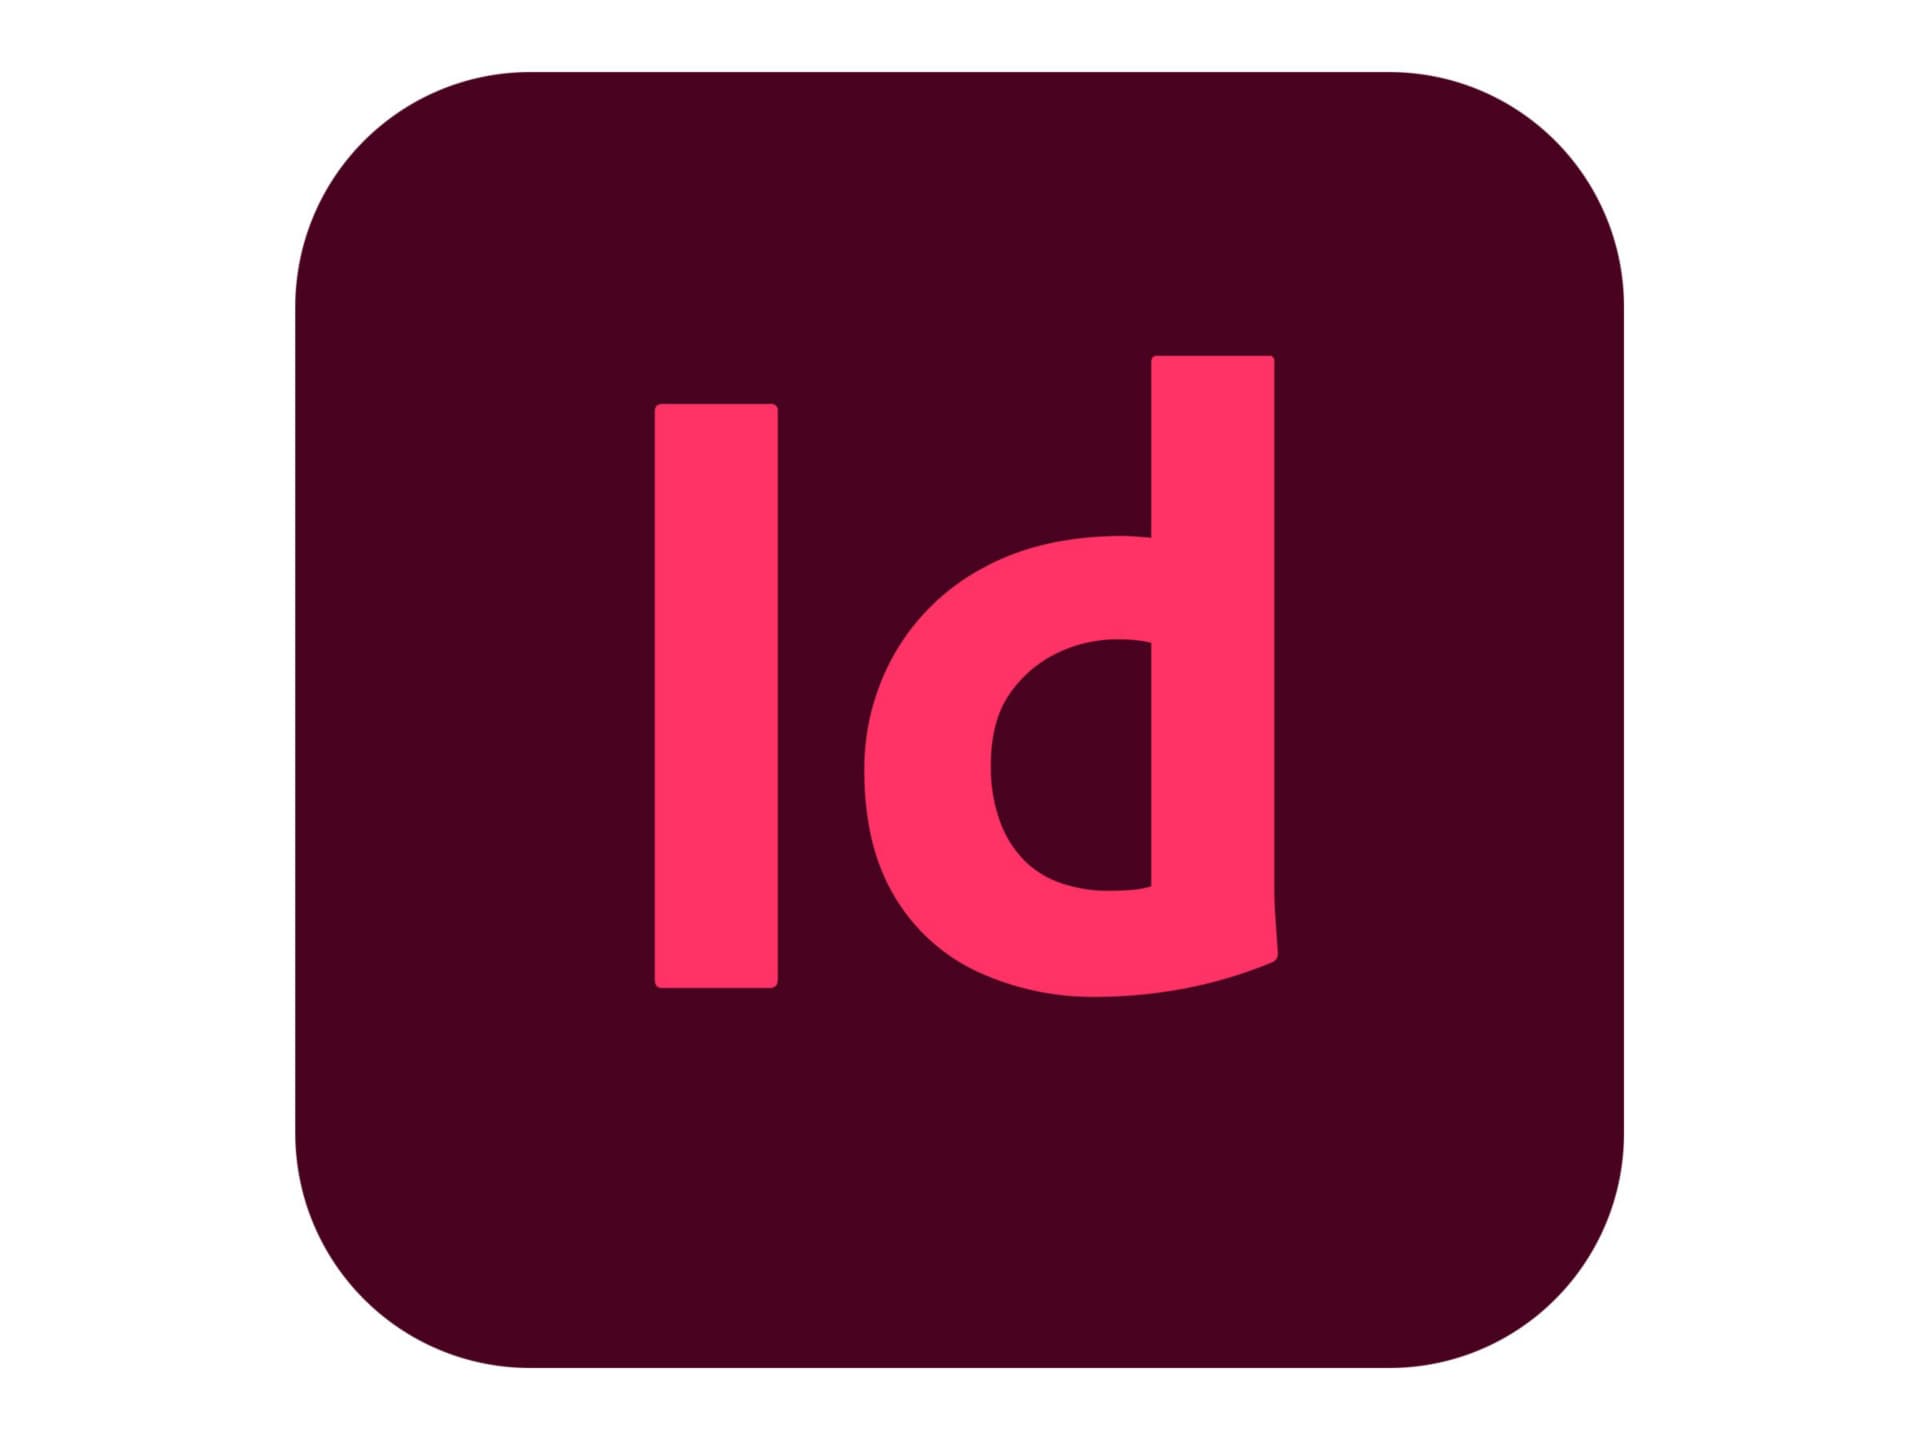 Adobe InDesign CC for Enterprise - Subscription New (1 month) - 1 named user